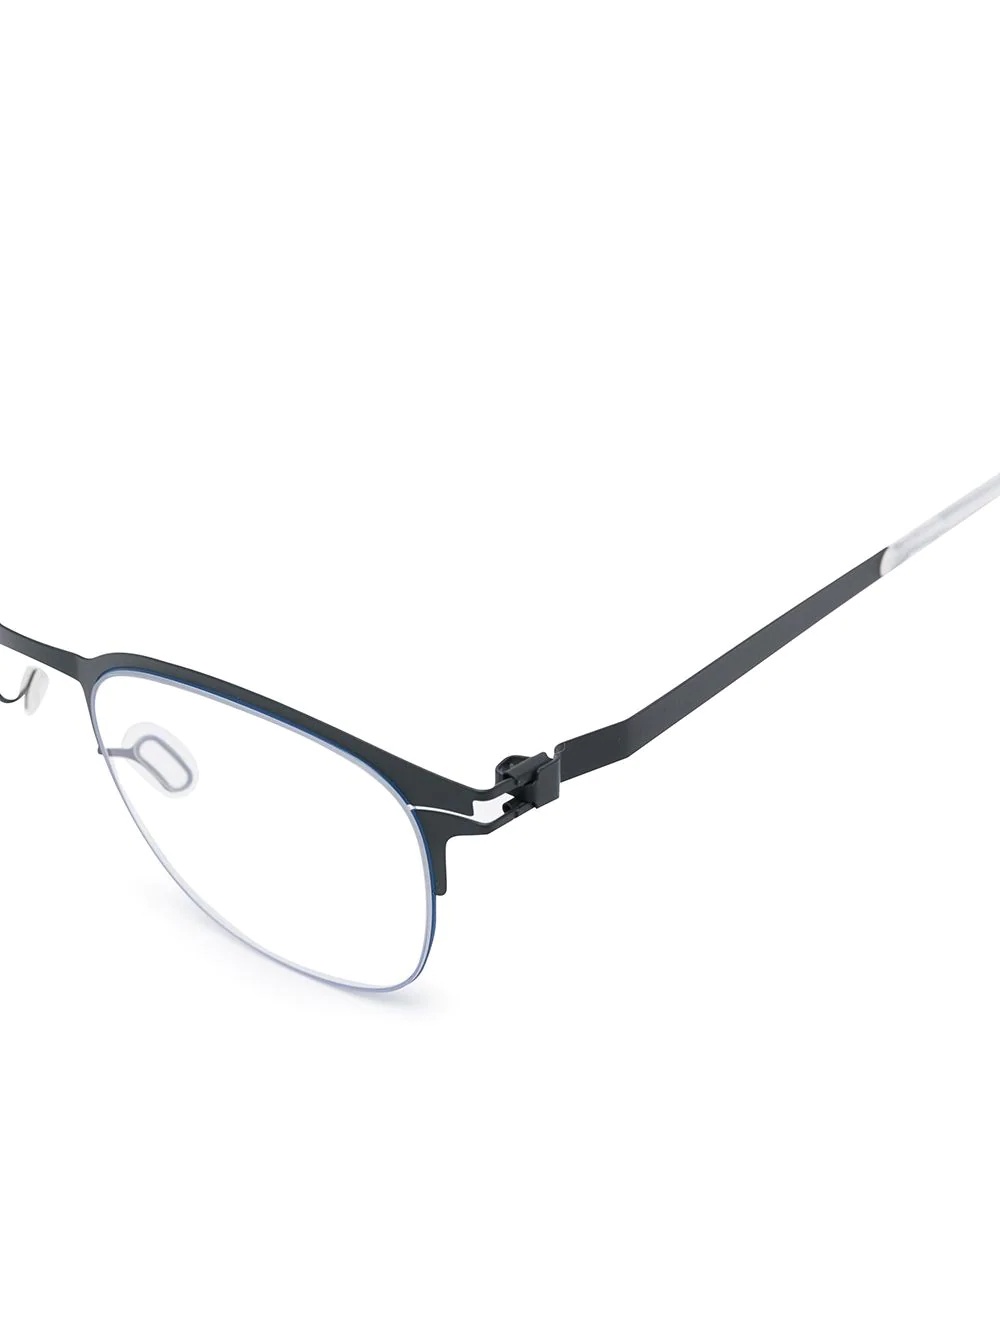 Neville pantos-frame glasses - 3